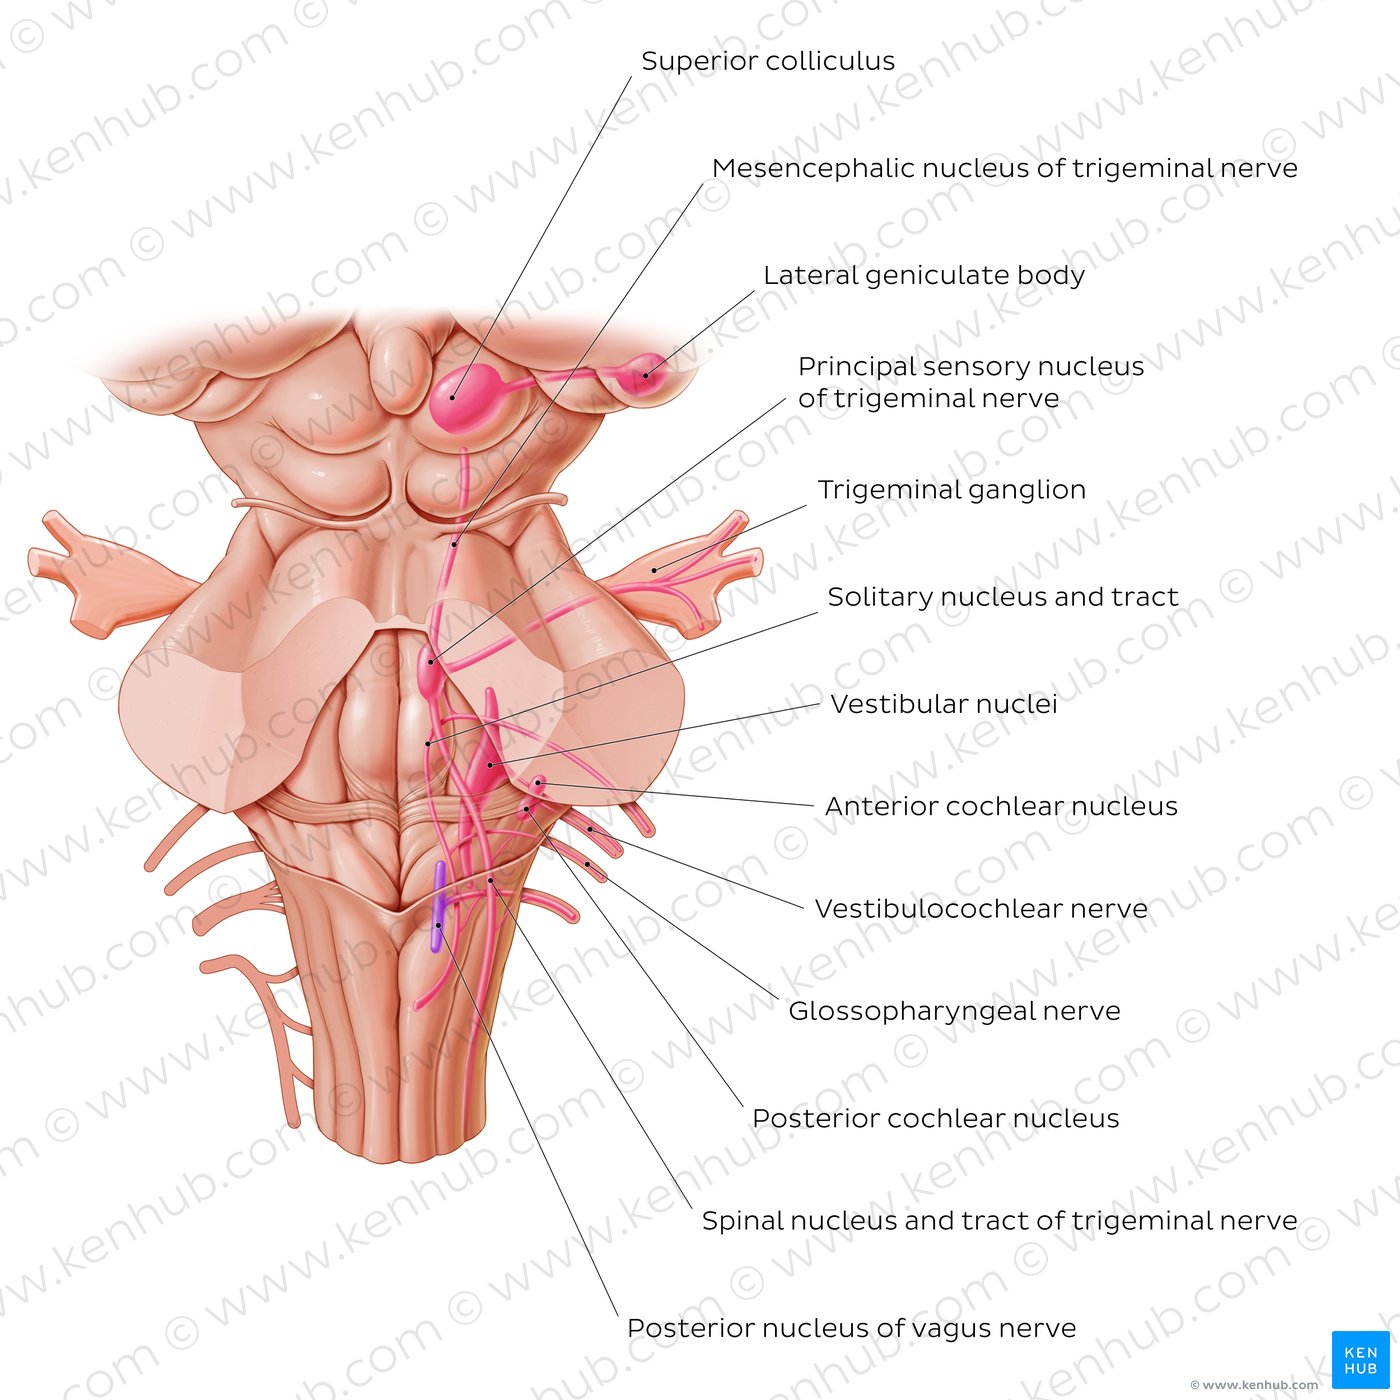 Sensory (afferent) cranial nerve nuclei